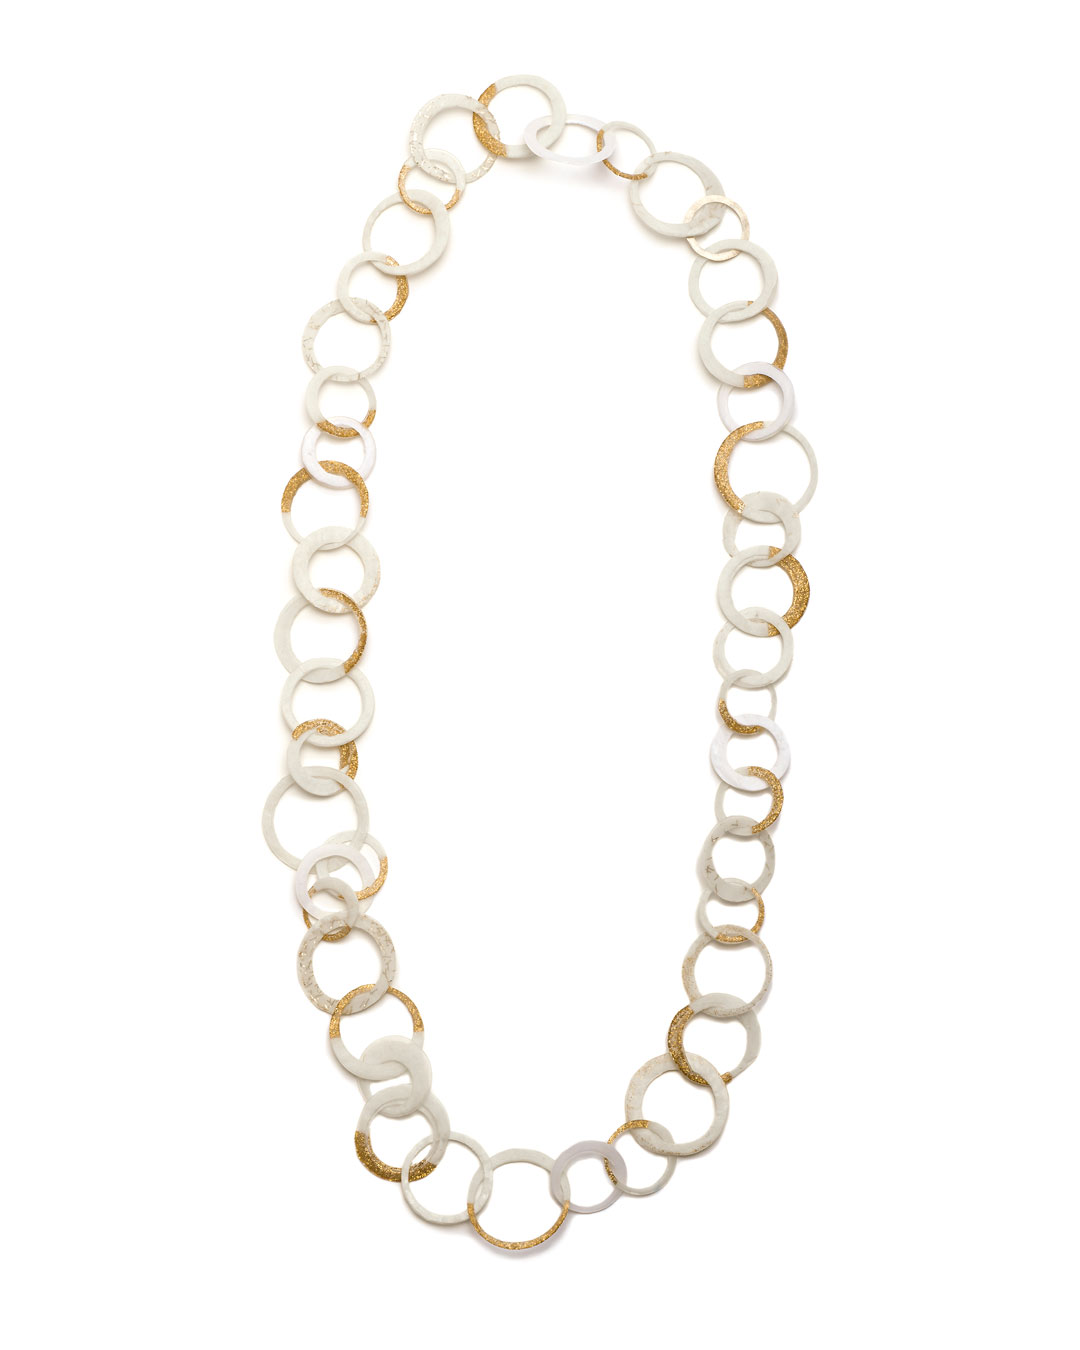 Karola Torkos, Rings, 2020, necklace; plastic, 14ct gold, L 940 mm, €420